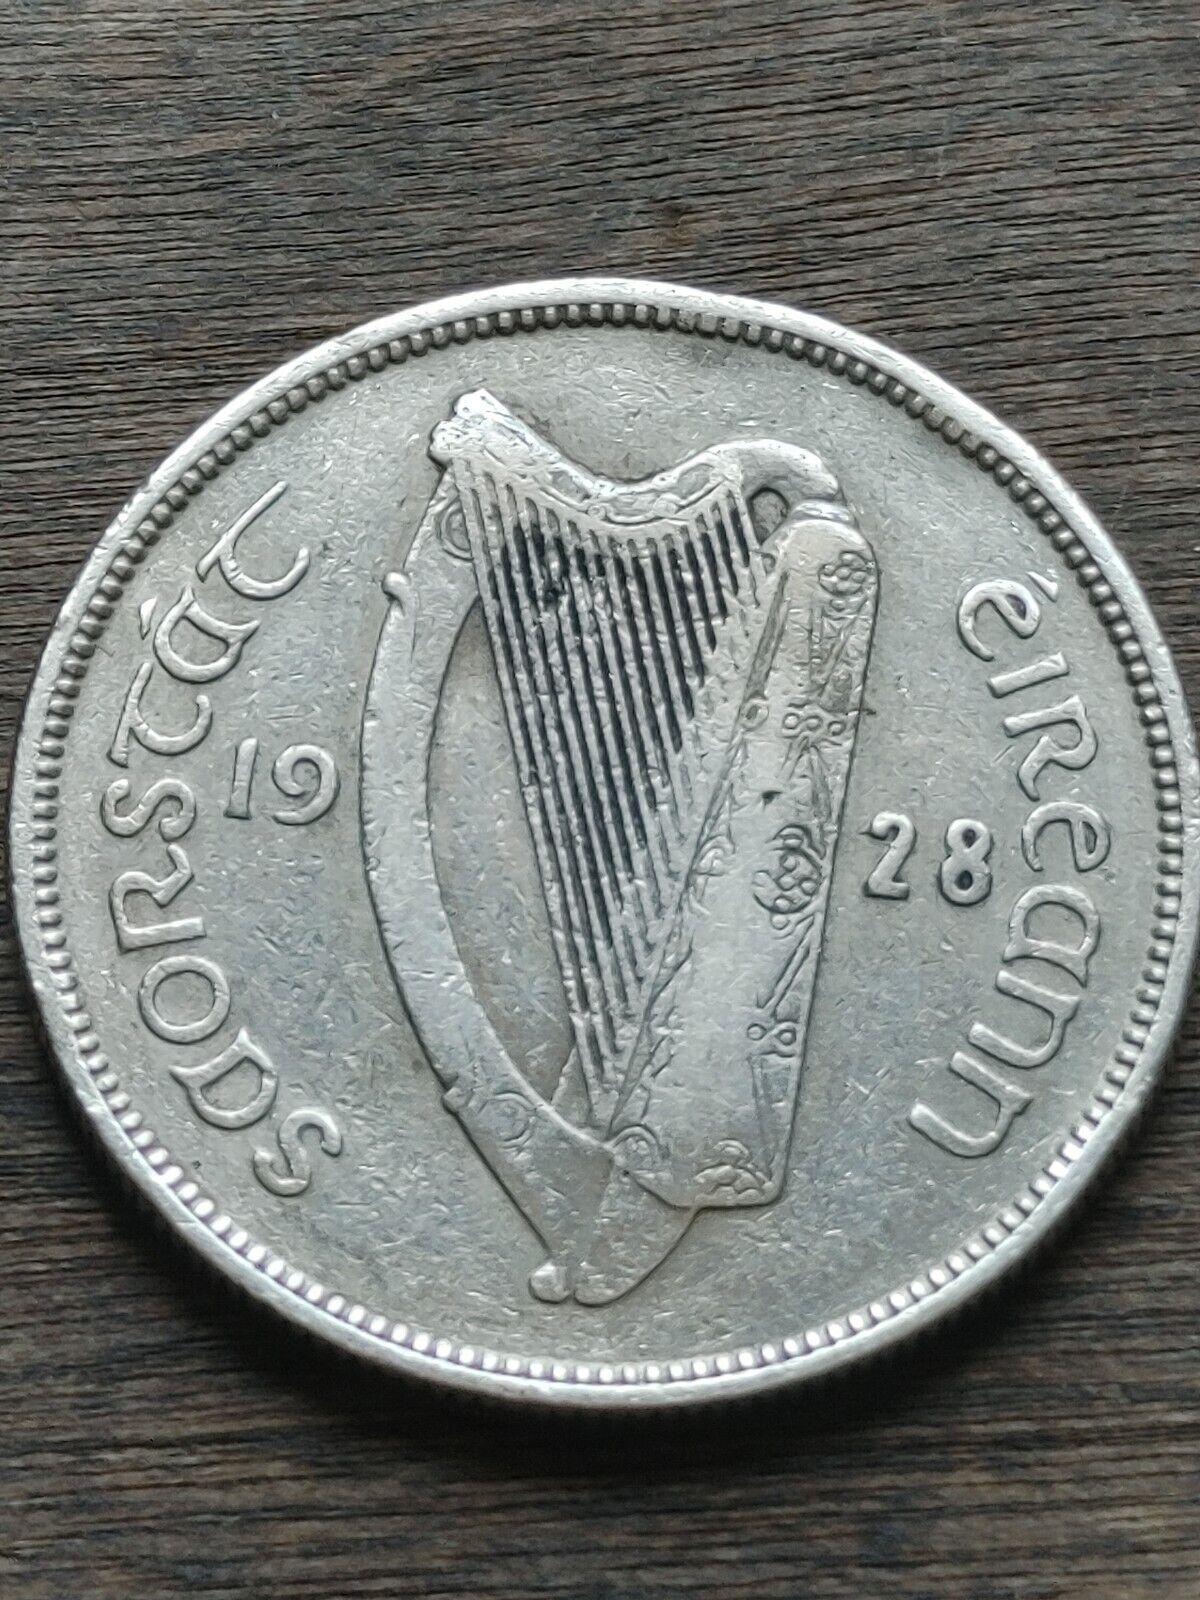 Original FINE 1928 Ireland Irish .750 Silver Florin Coin, w Holder Included 